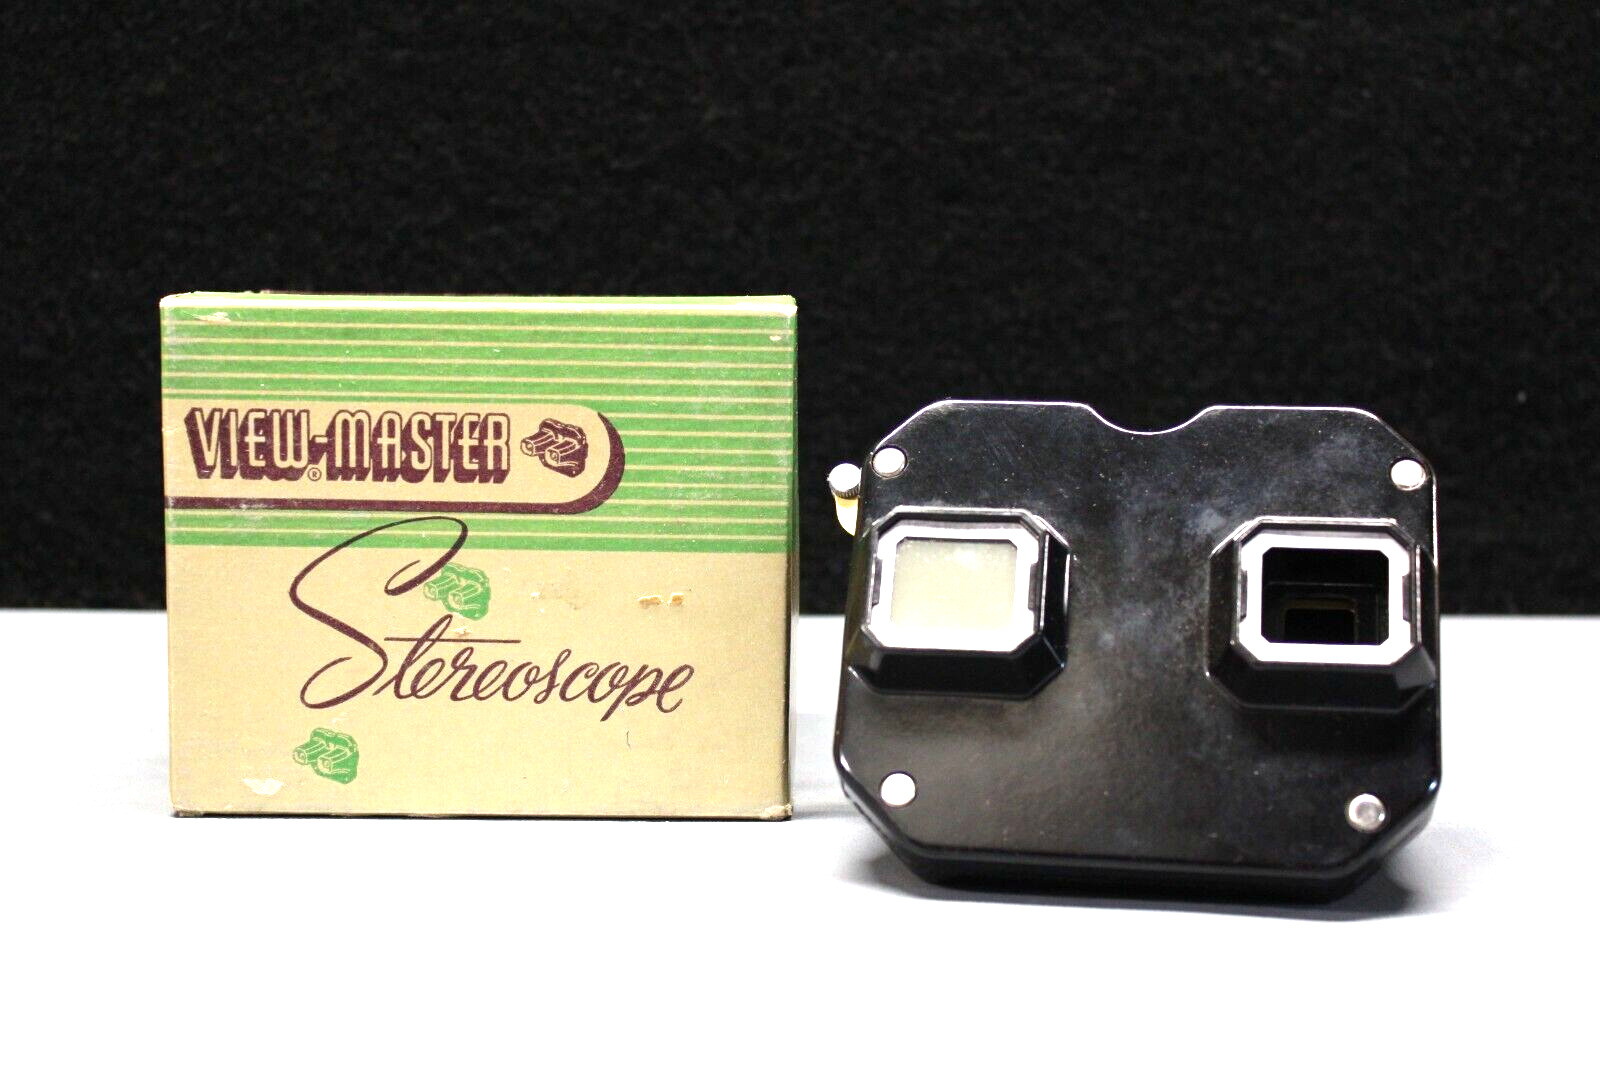 VINTAGE Sawyers View-Master Stereoscope w/ Original Box